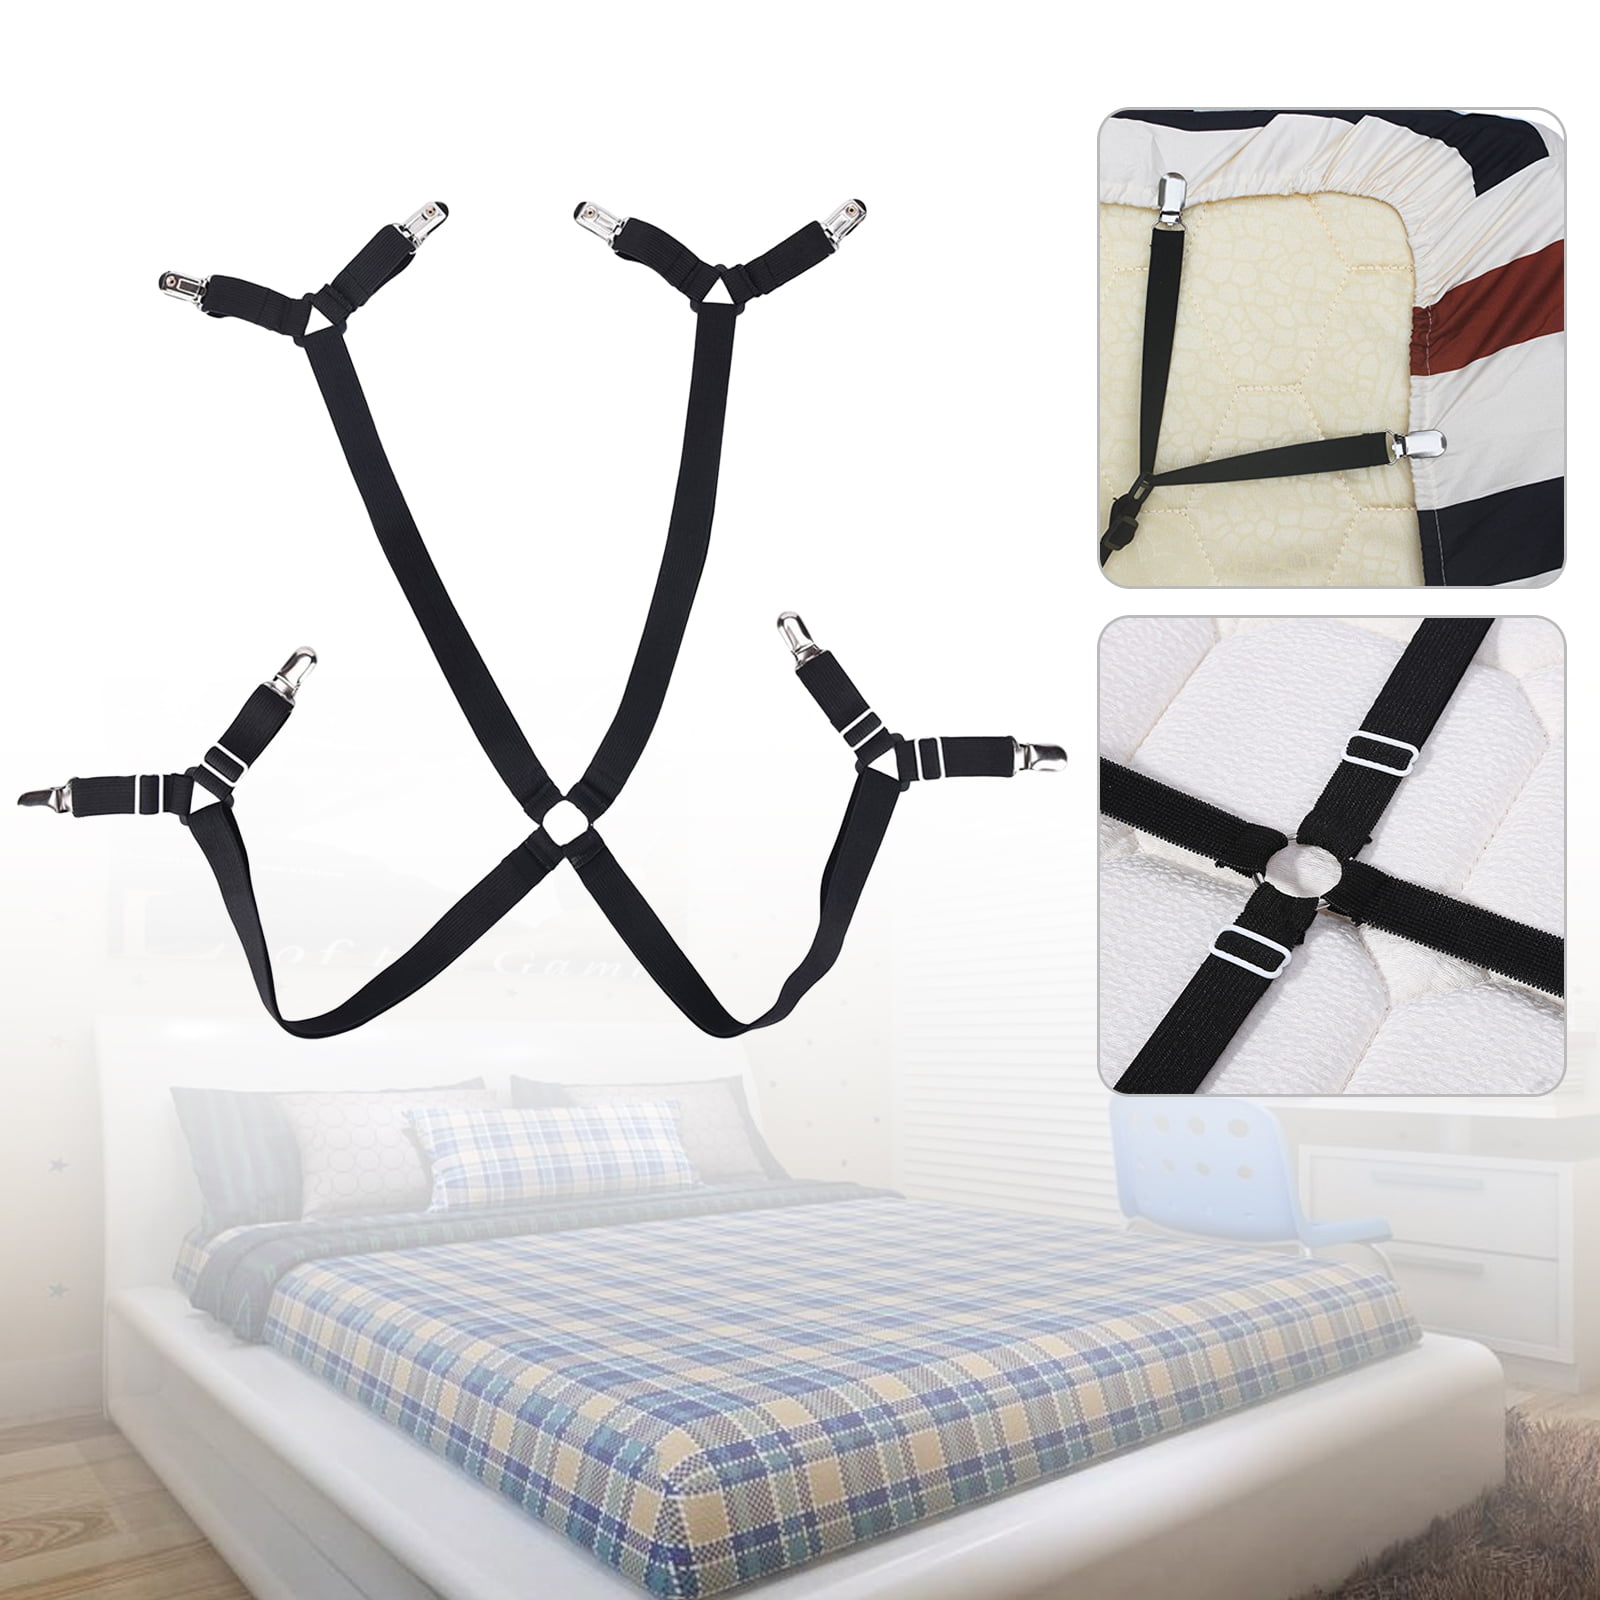 4x Adjustable Bed Sheet Mattress Holder Fastener Grippers Clips Suspender Straps 